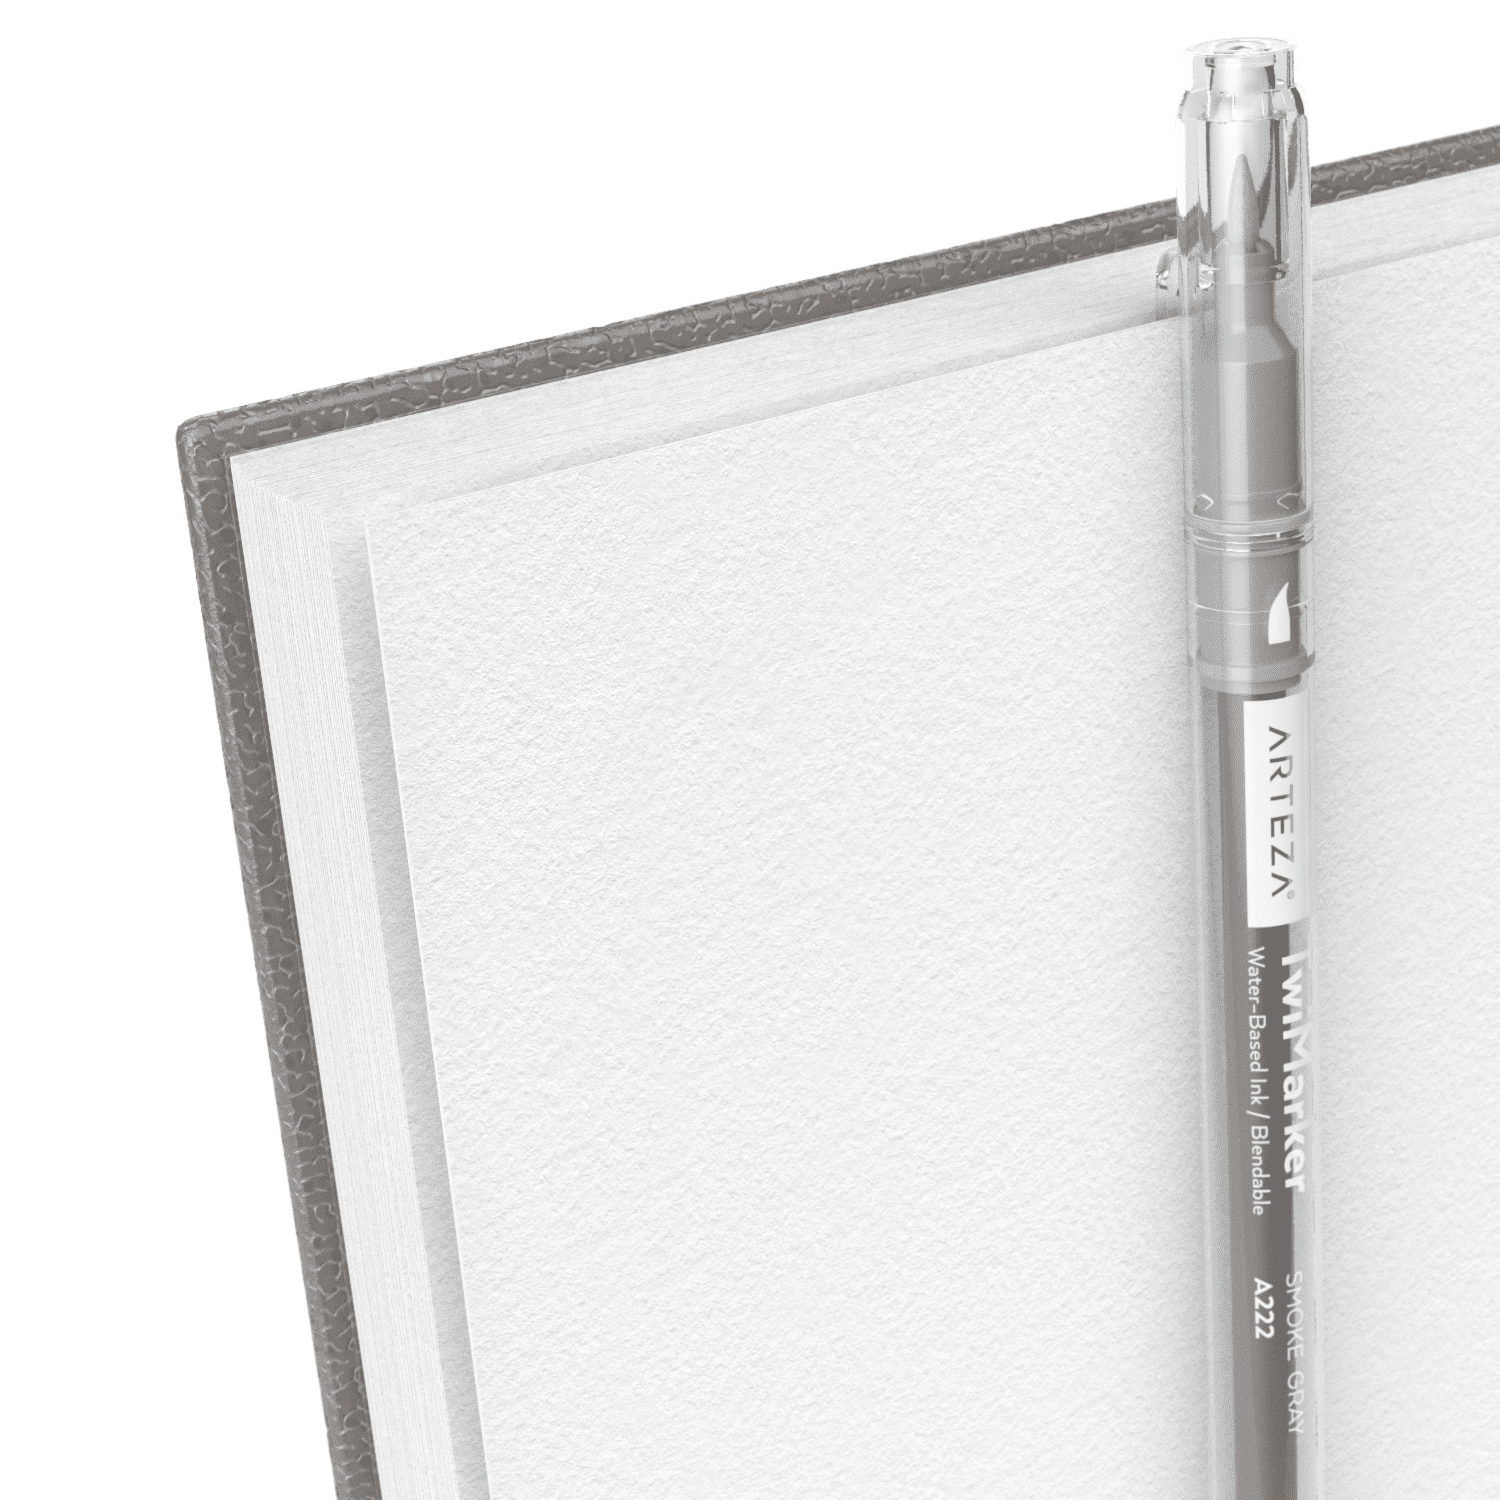 Sketch Book 5.5 X 8.5 - Spiral Sketchbook Pack of 2 SuFly 200